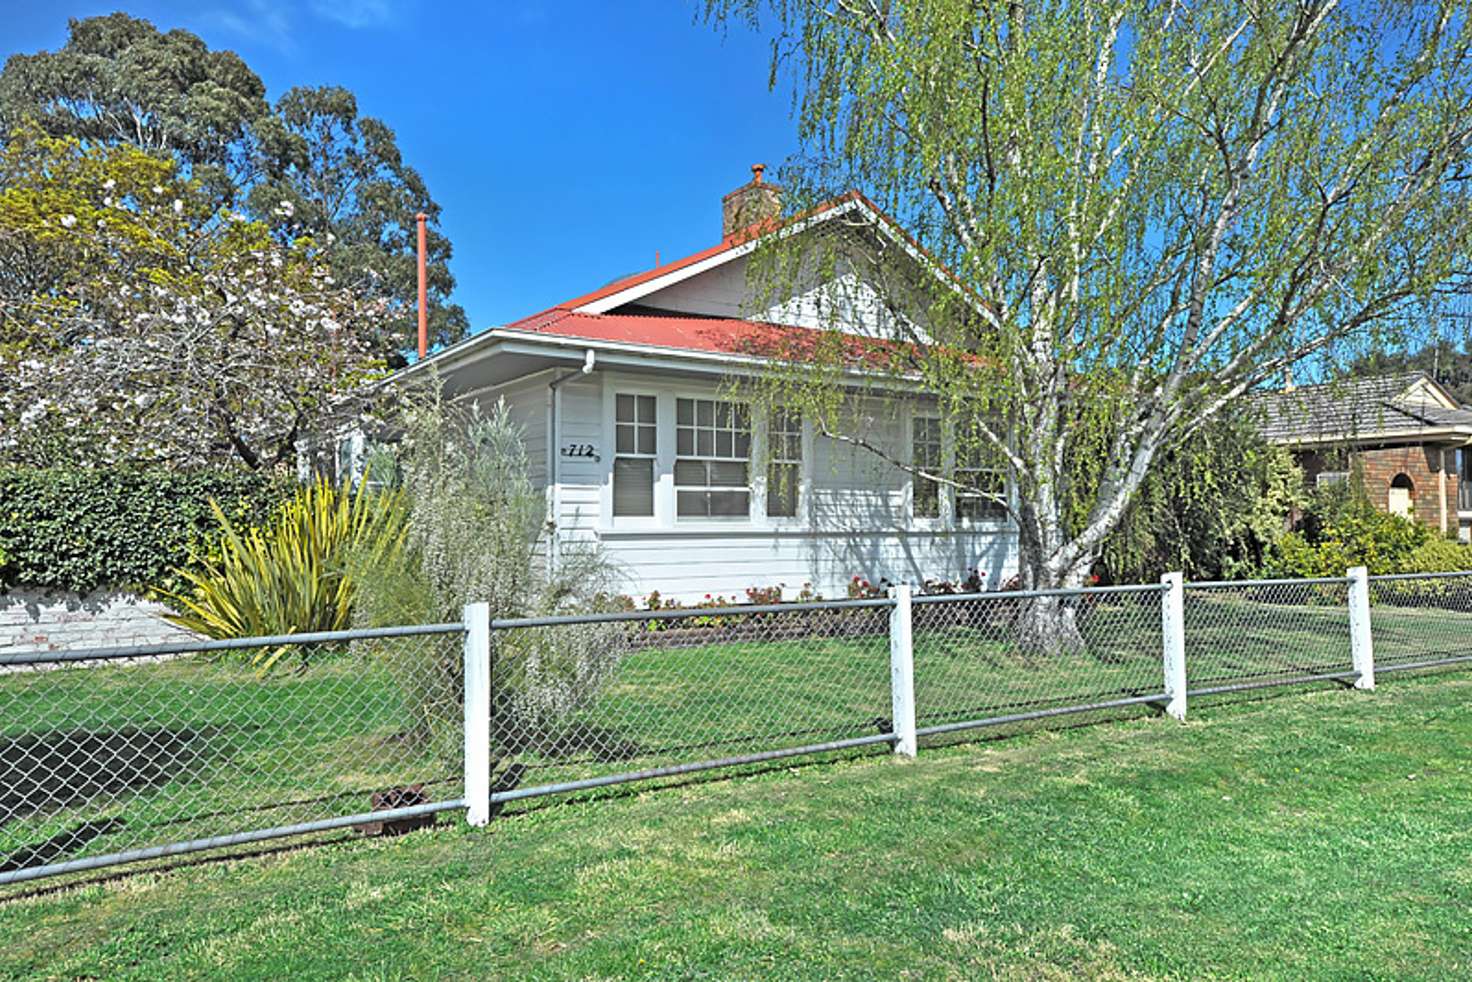 Main view of Homely house listing, 712 Eureka Street, Ballarat East VIC 3350